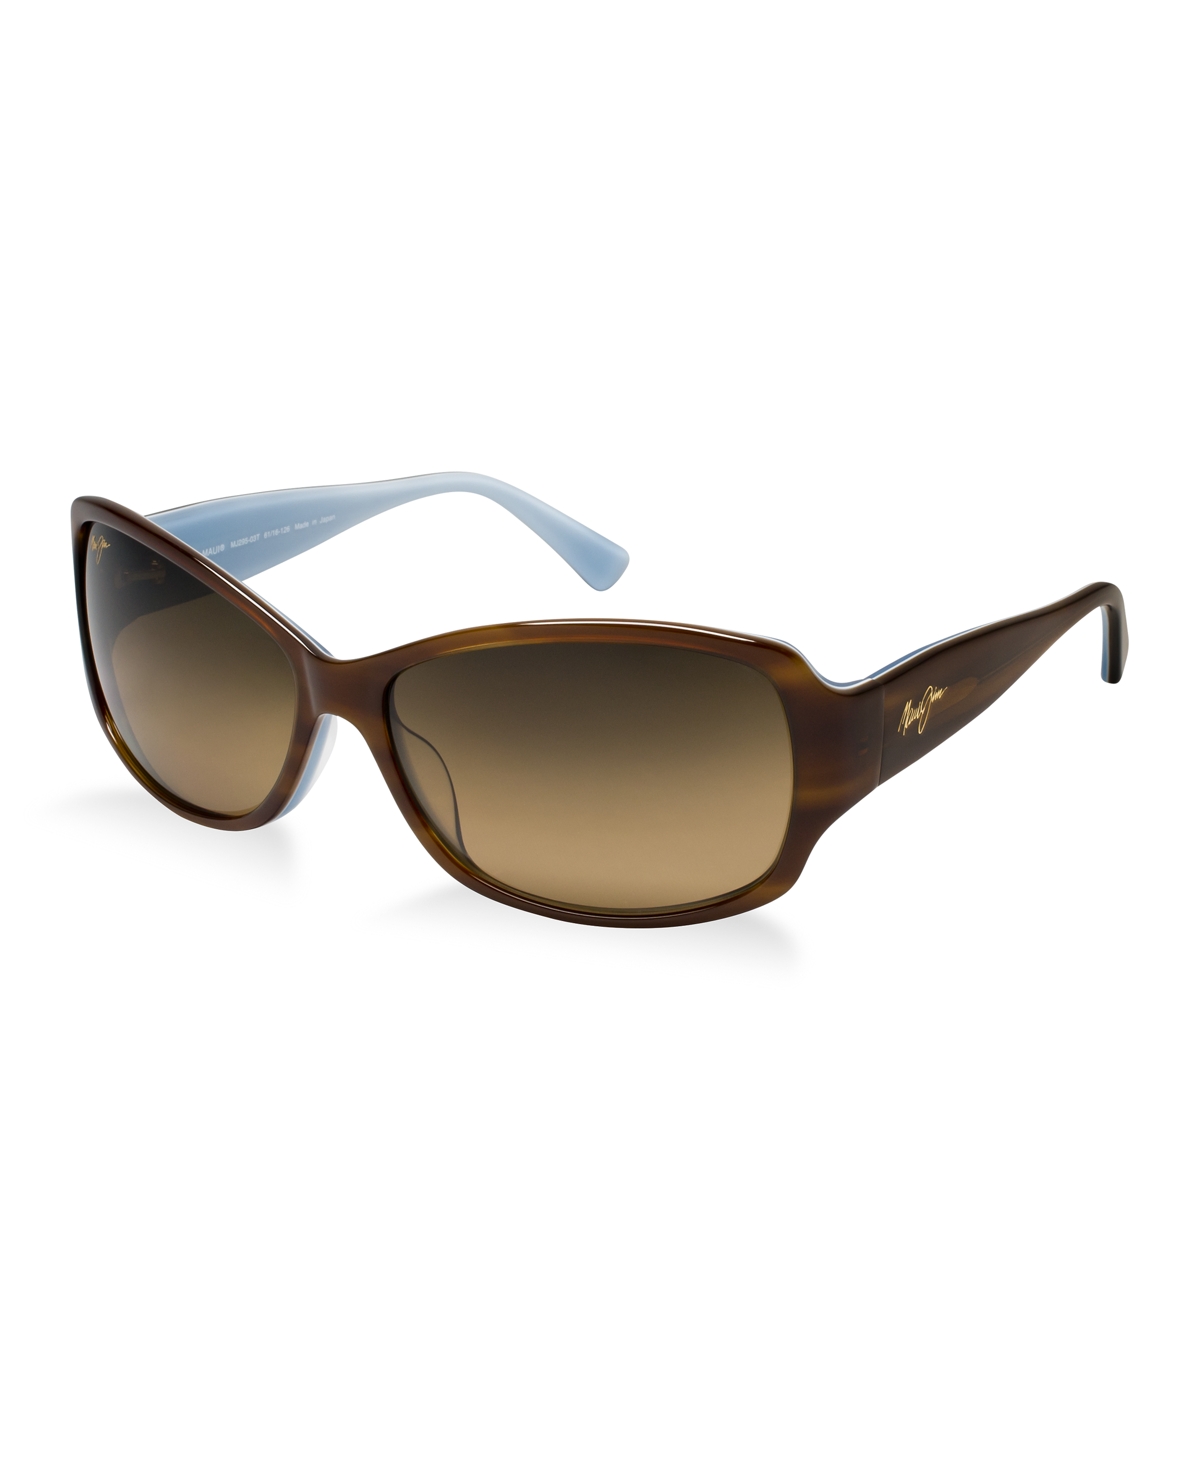 Polarized Nalani Sunglasses, 295 - TORTOISE BLUE/BRONZE MIR POL